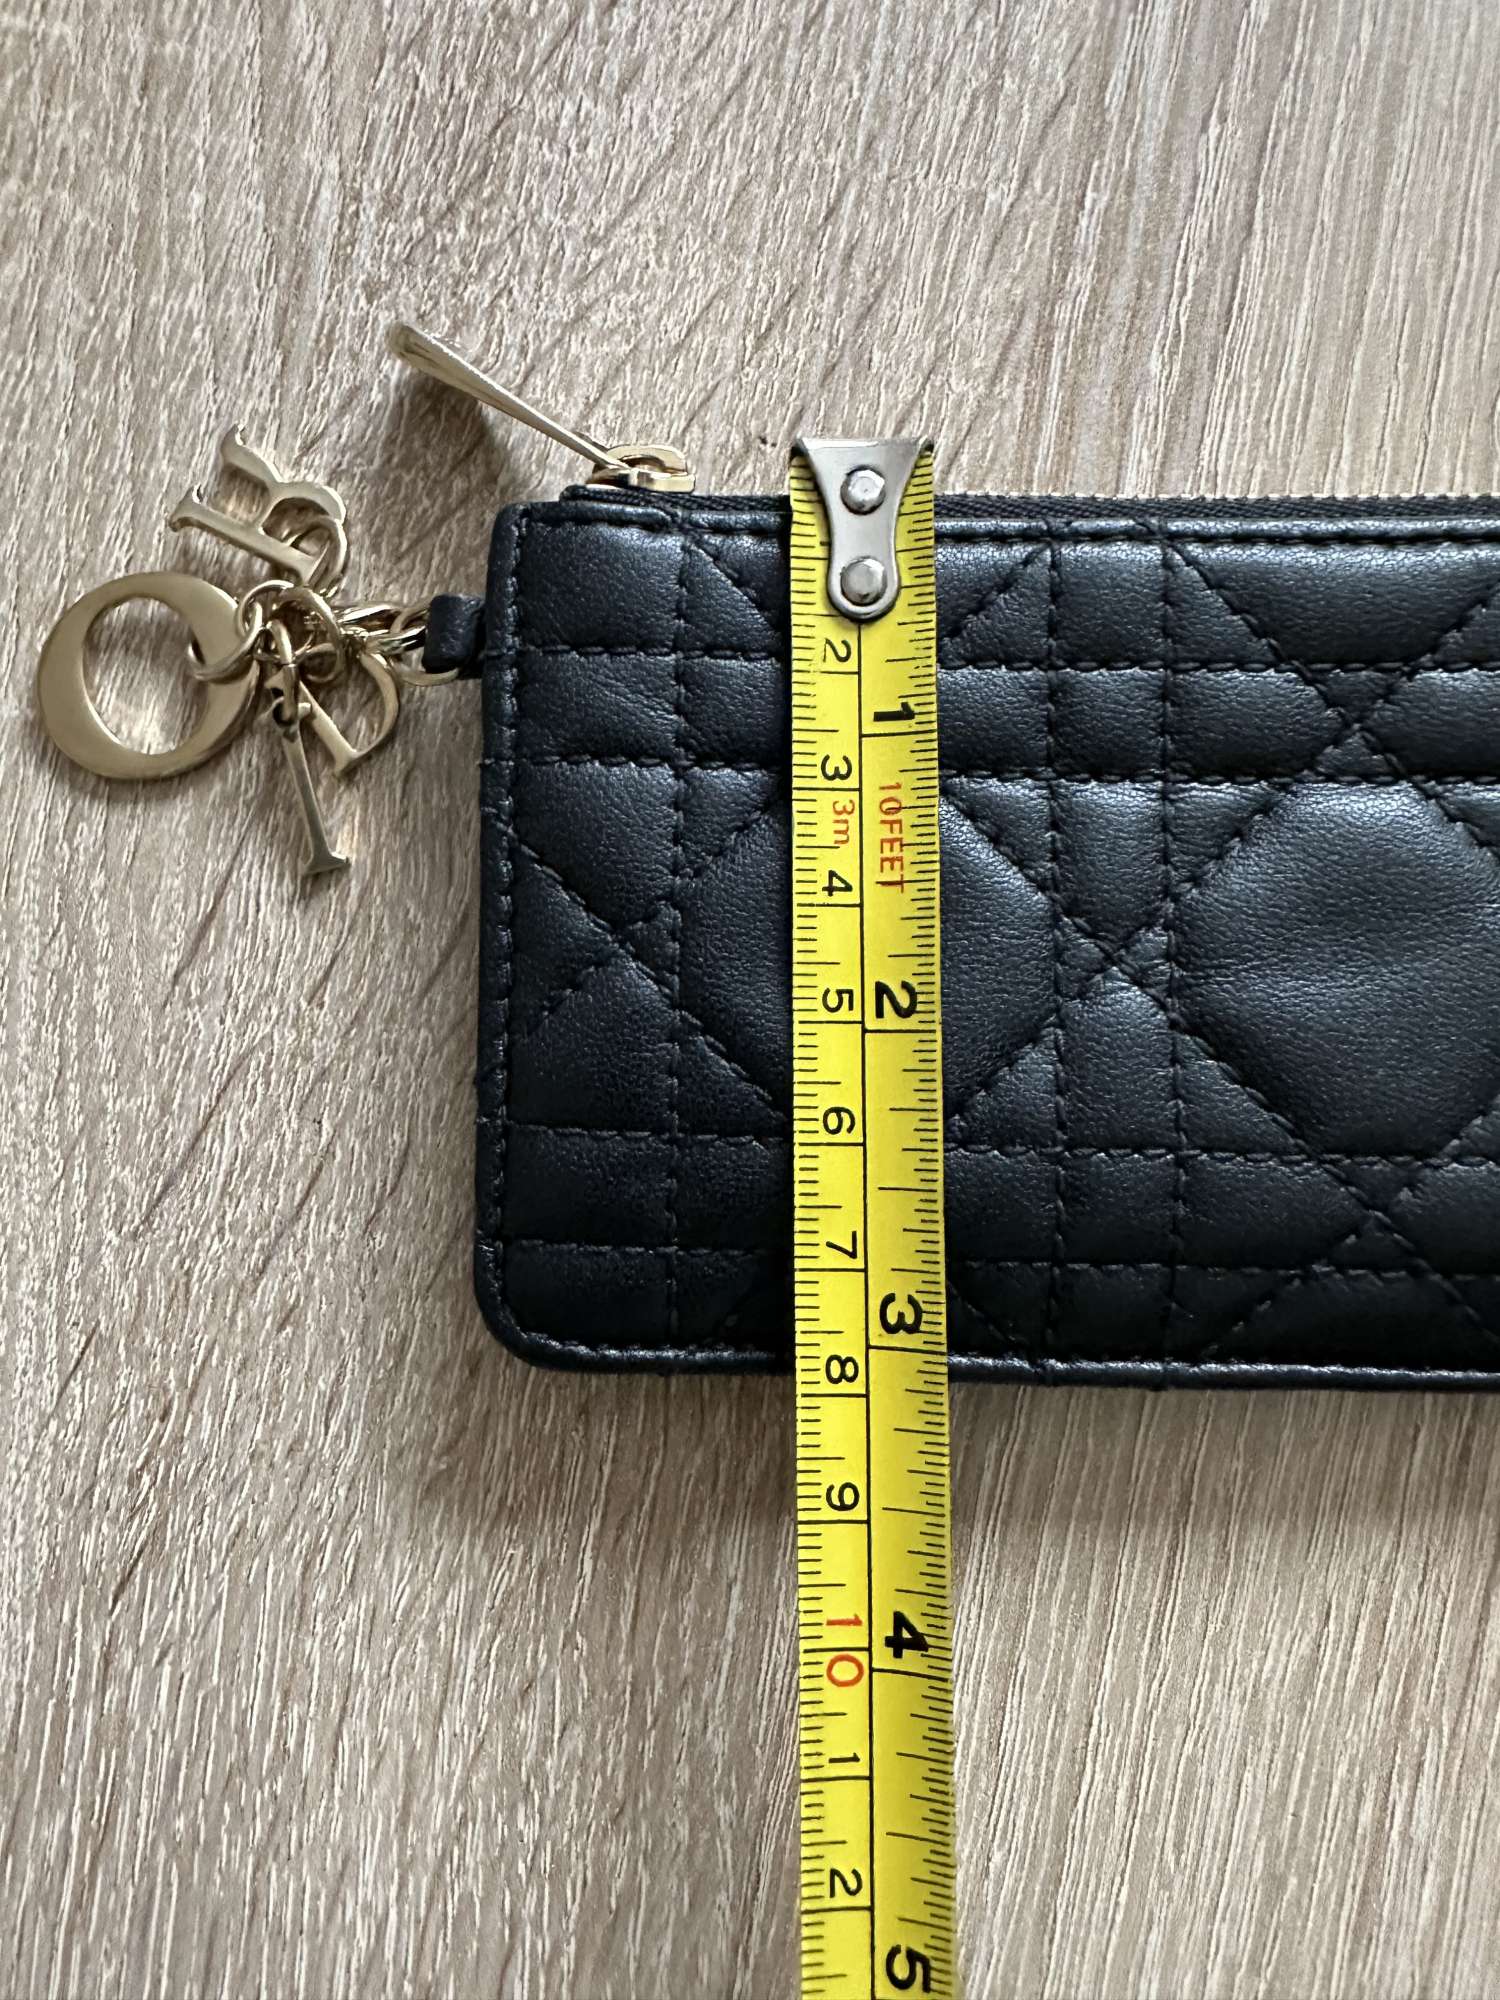 Dior peněženka / klíčenka